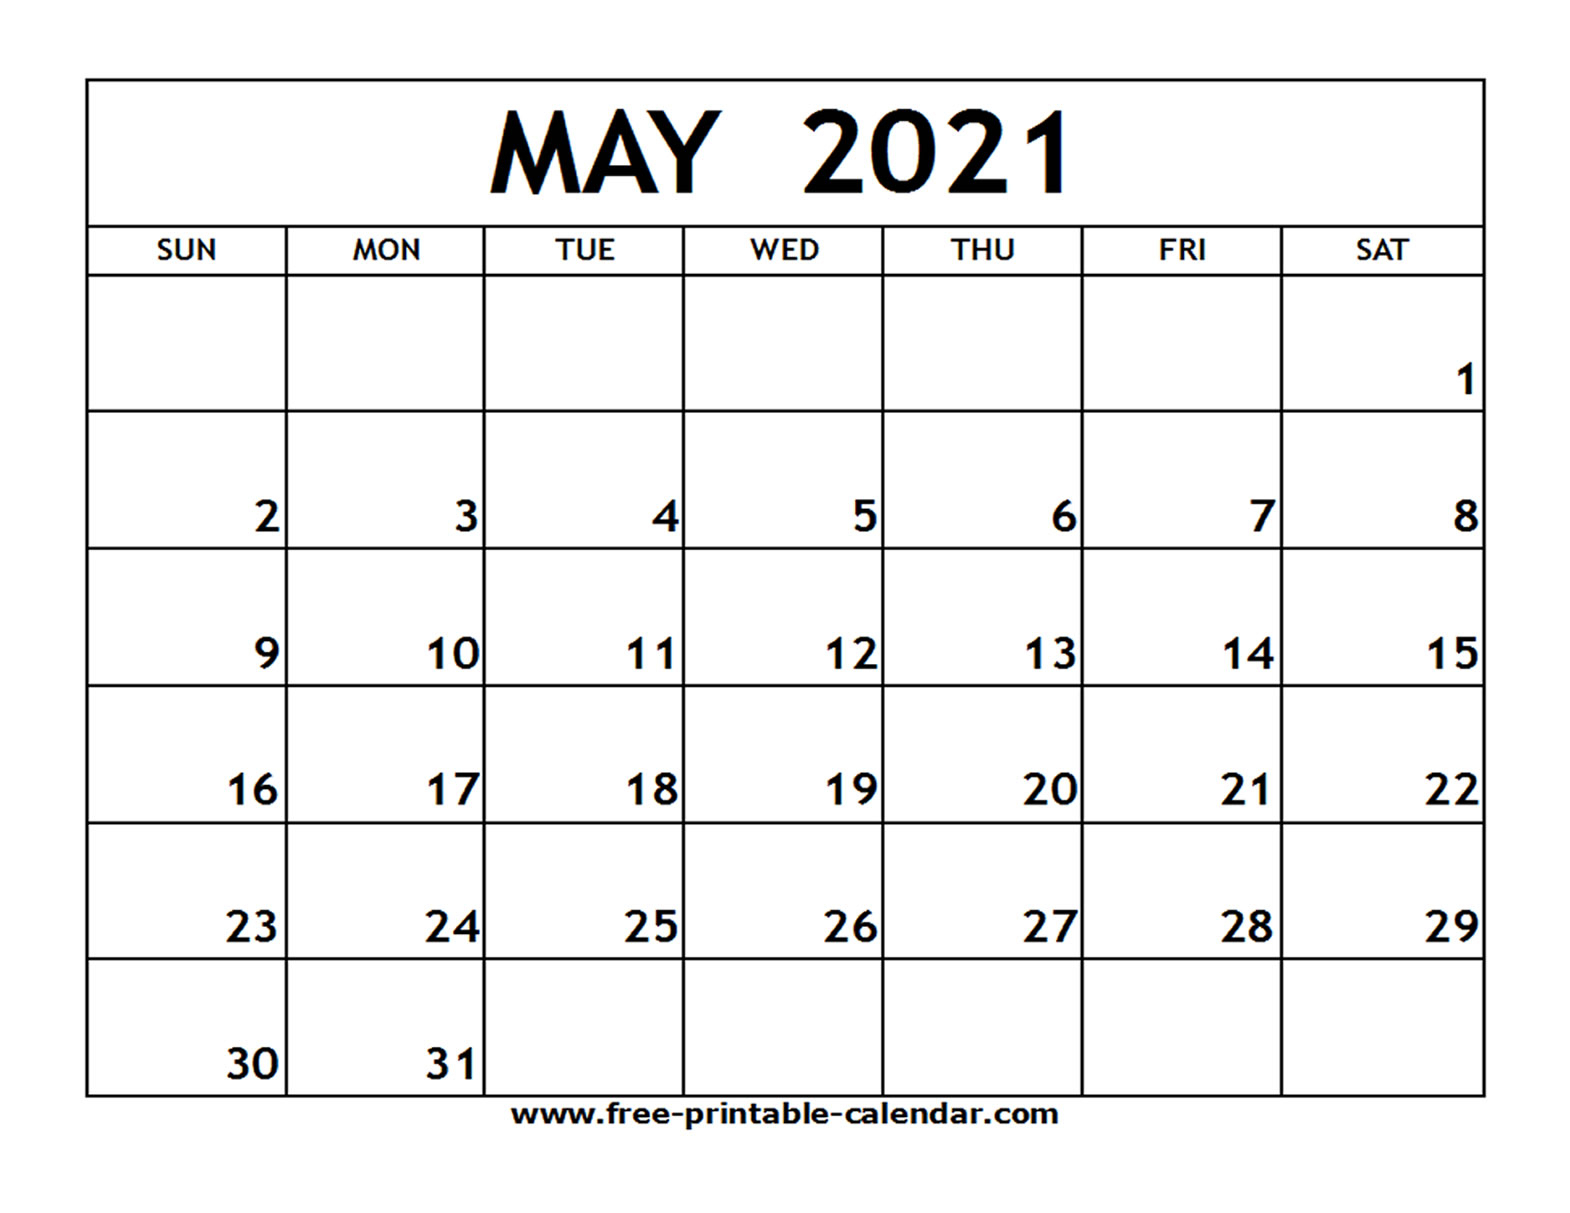 May 2021 Printable Calendar - Free-Printable-Calendar